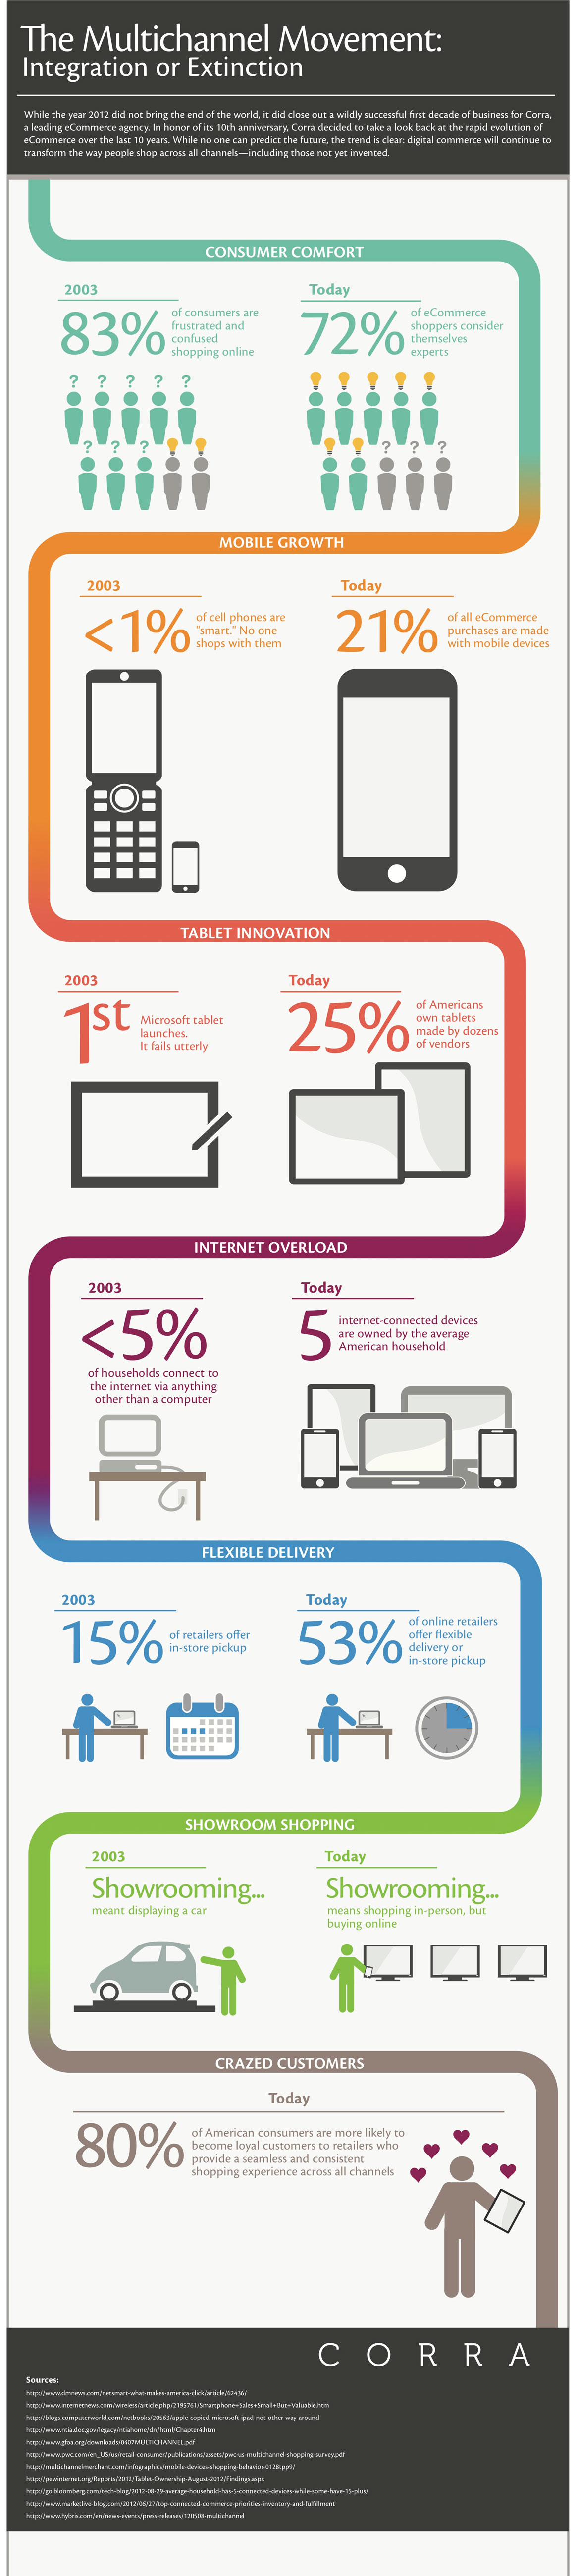 e-Commerce Transformation-Infographic